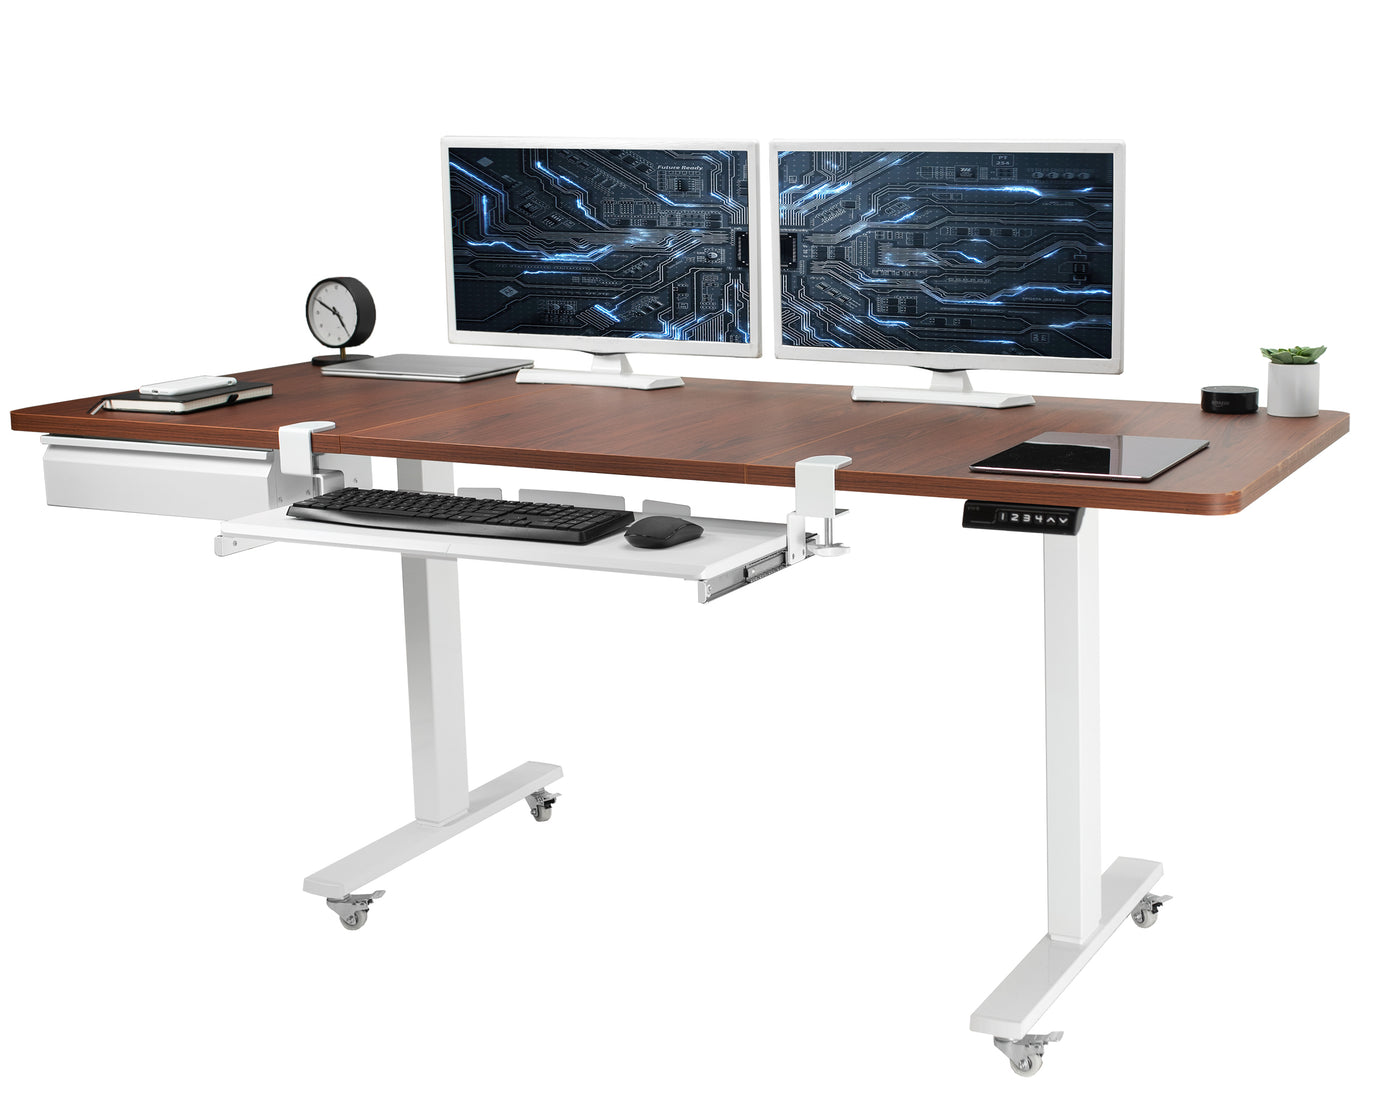 vivo Electric 60x24 Desk w/ Drawer & Casters, Dark Walnut Table Top, Black Frame